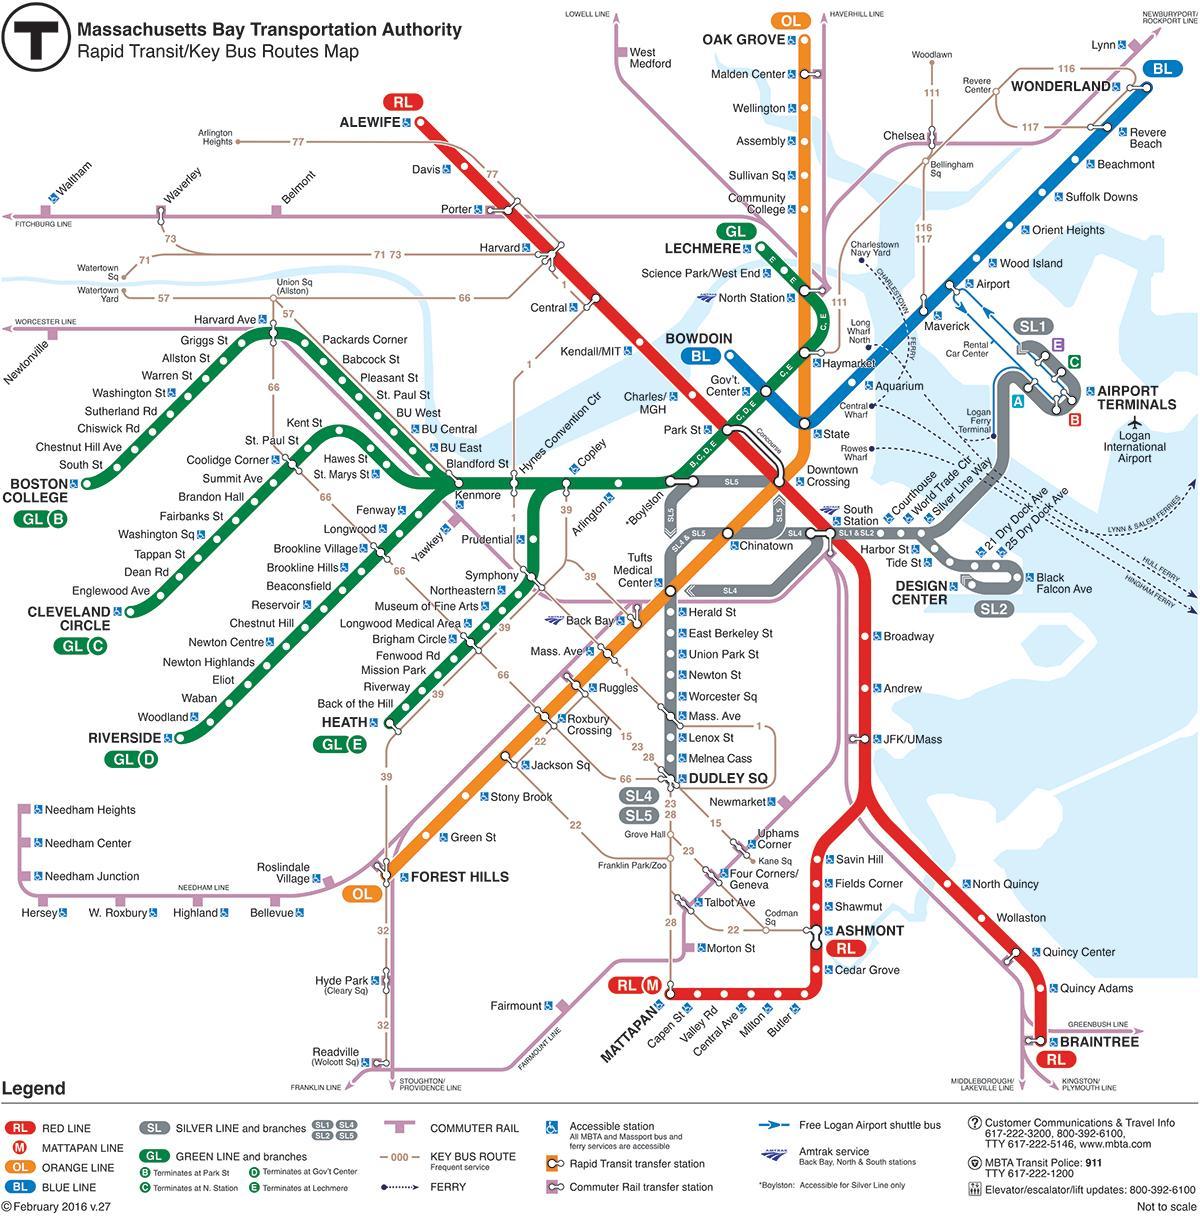 MBTA karta röda linjen